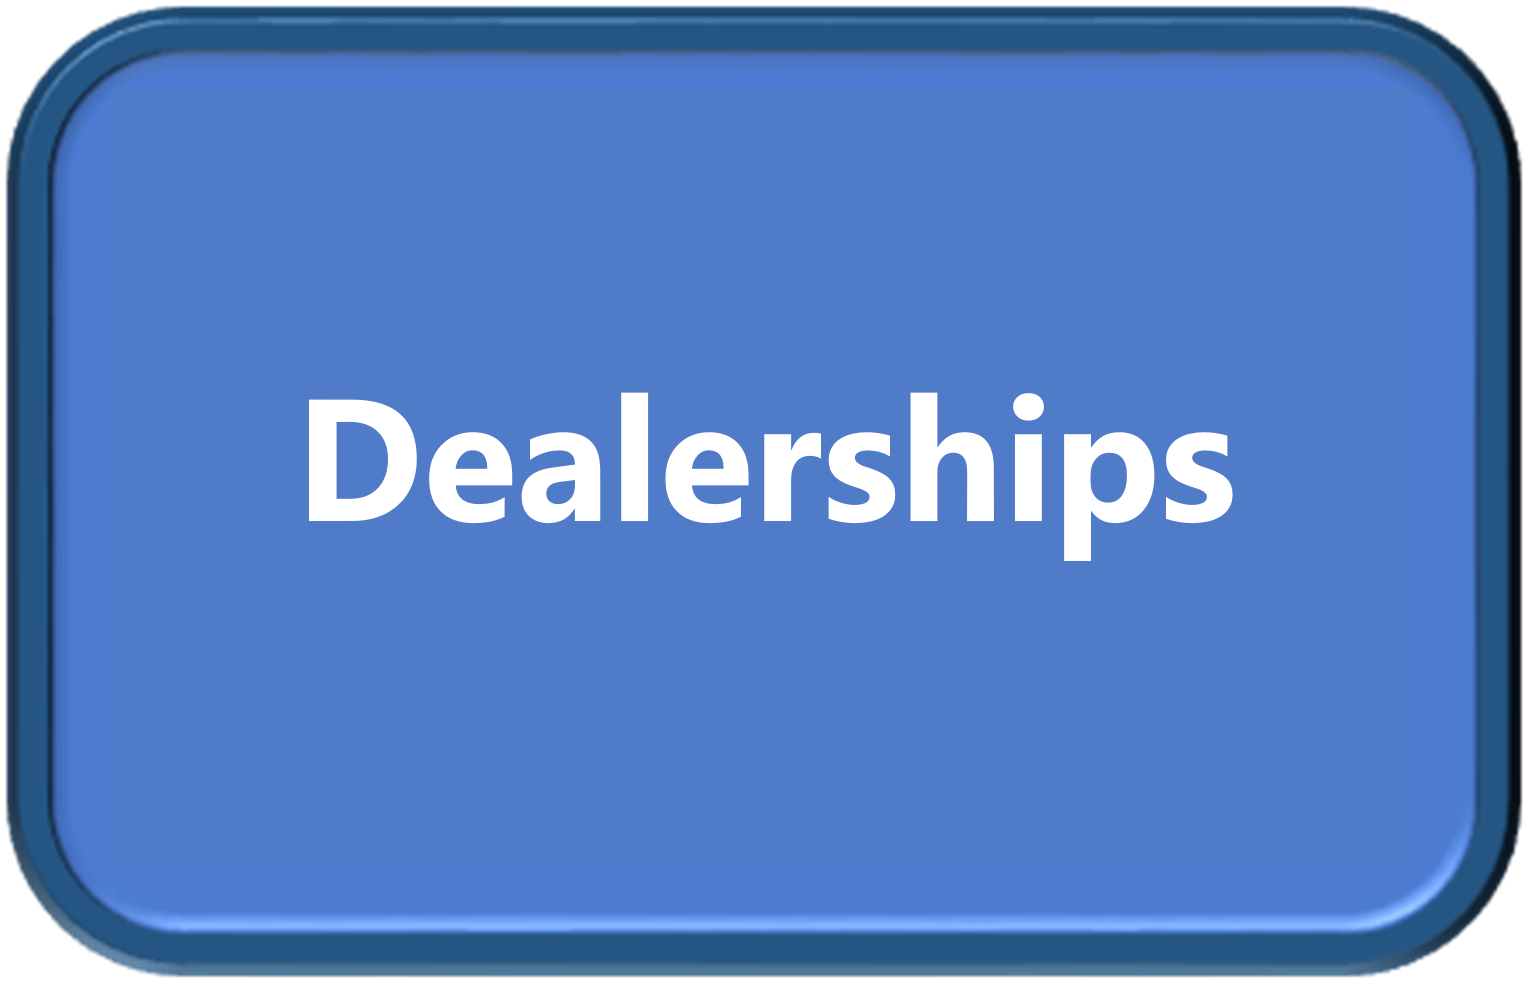 Dealerships Button